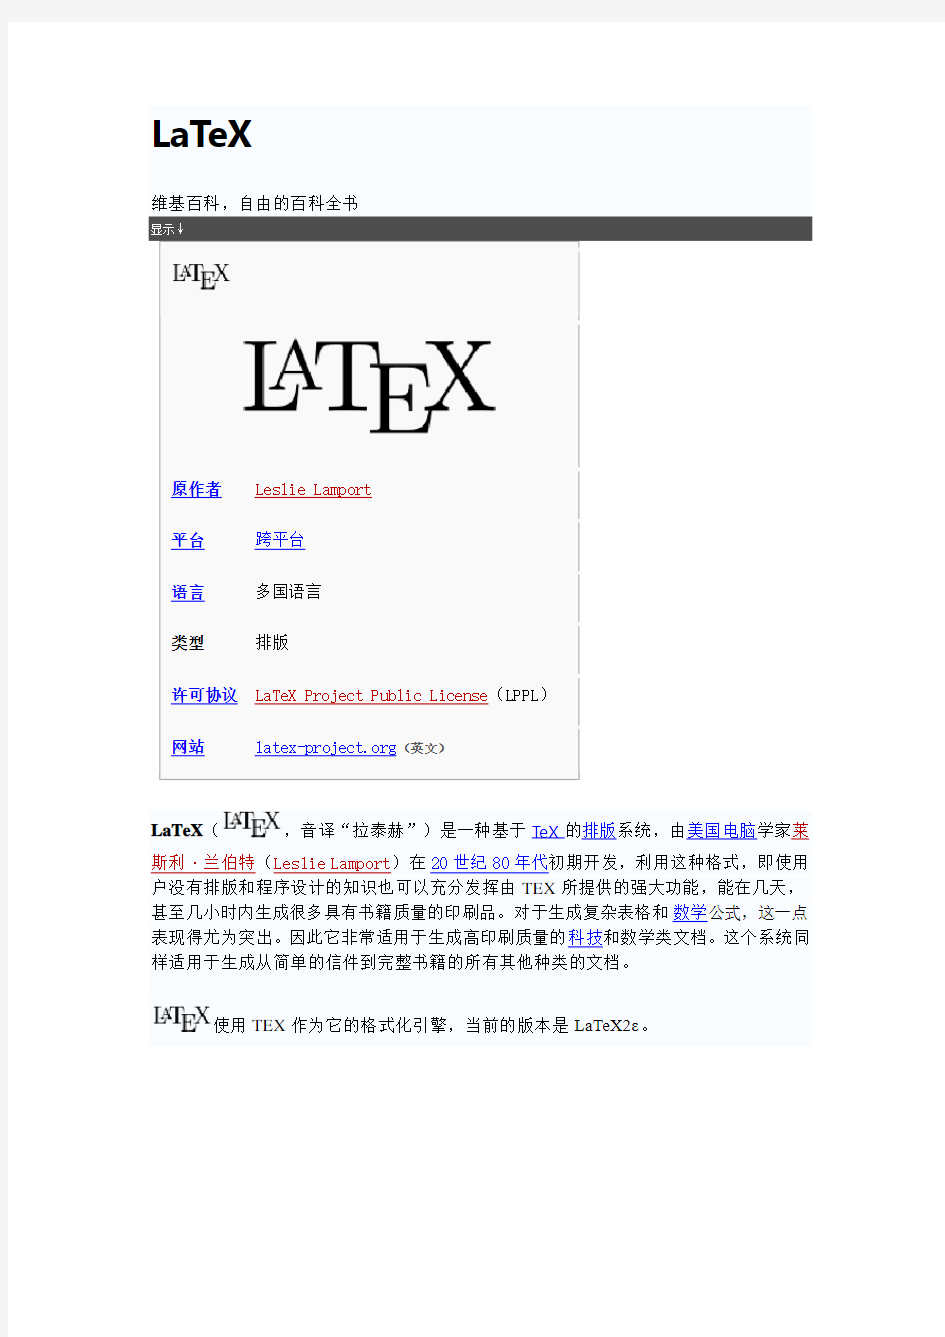 LATEX排版软件介绍